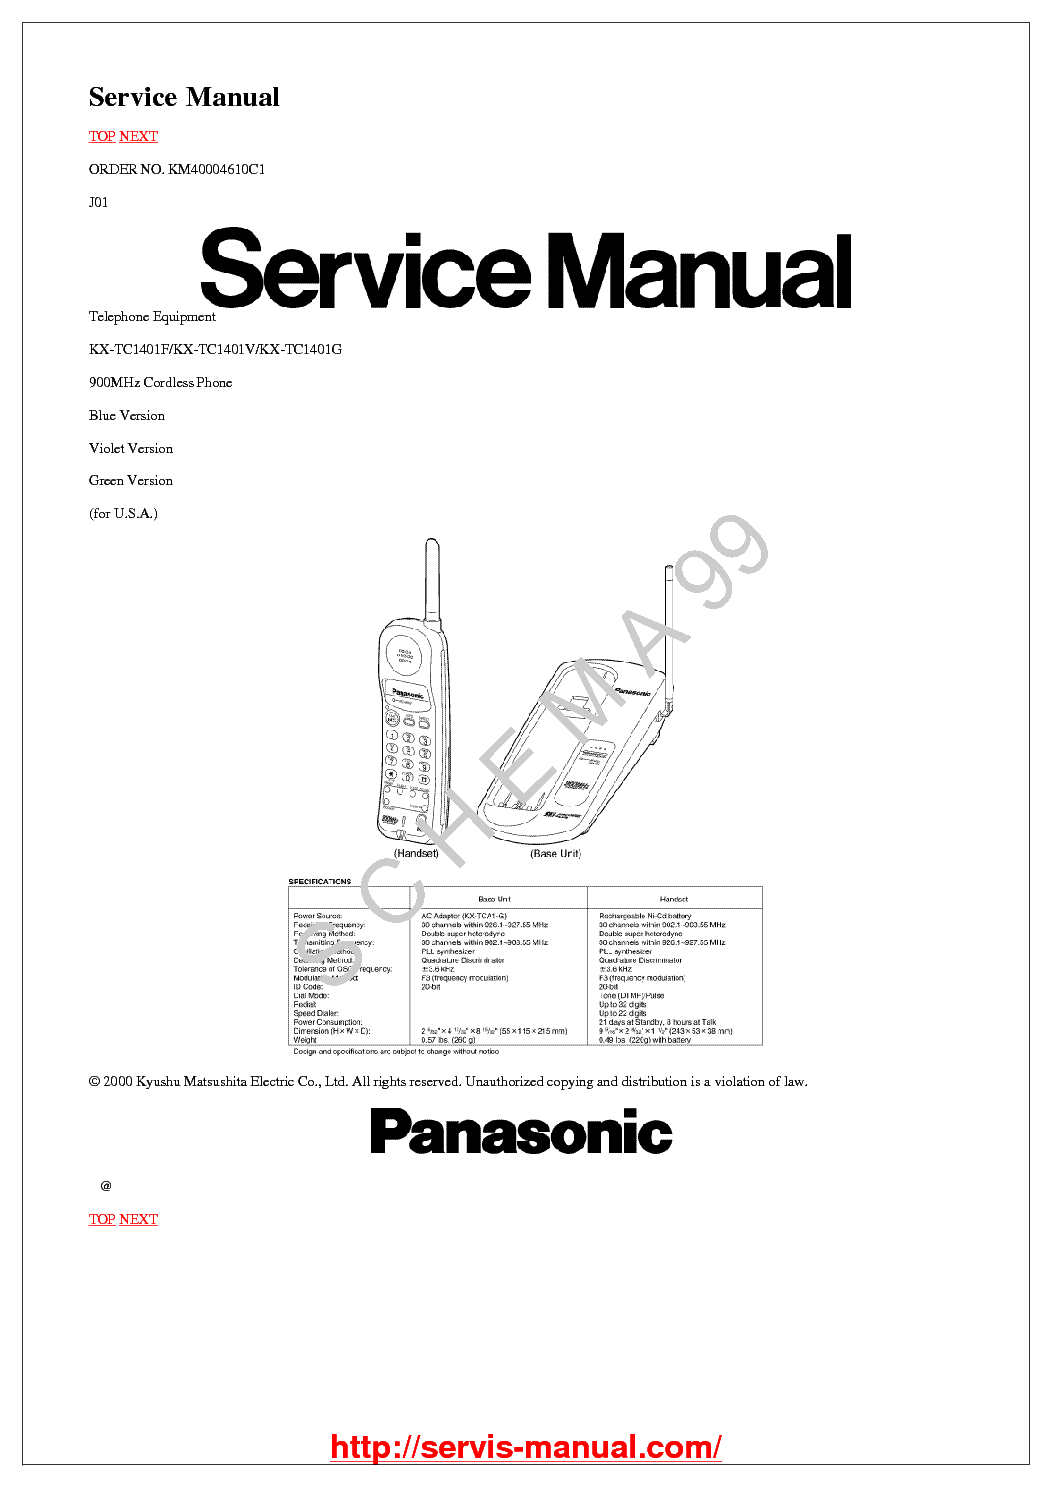 Panasonic kx tc 1401 инструкция